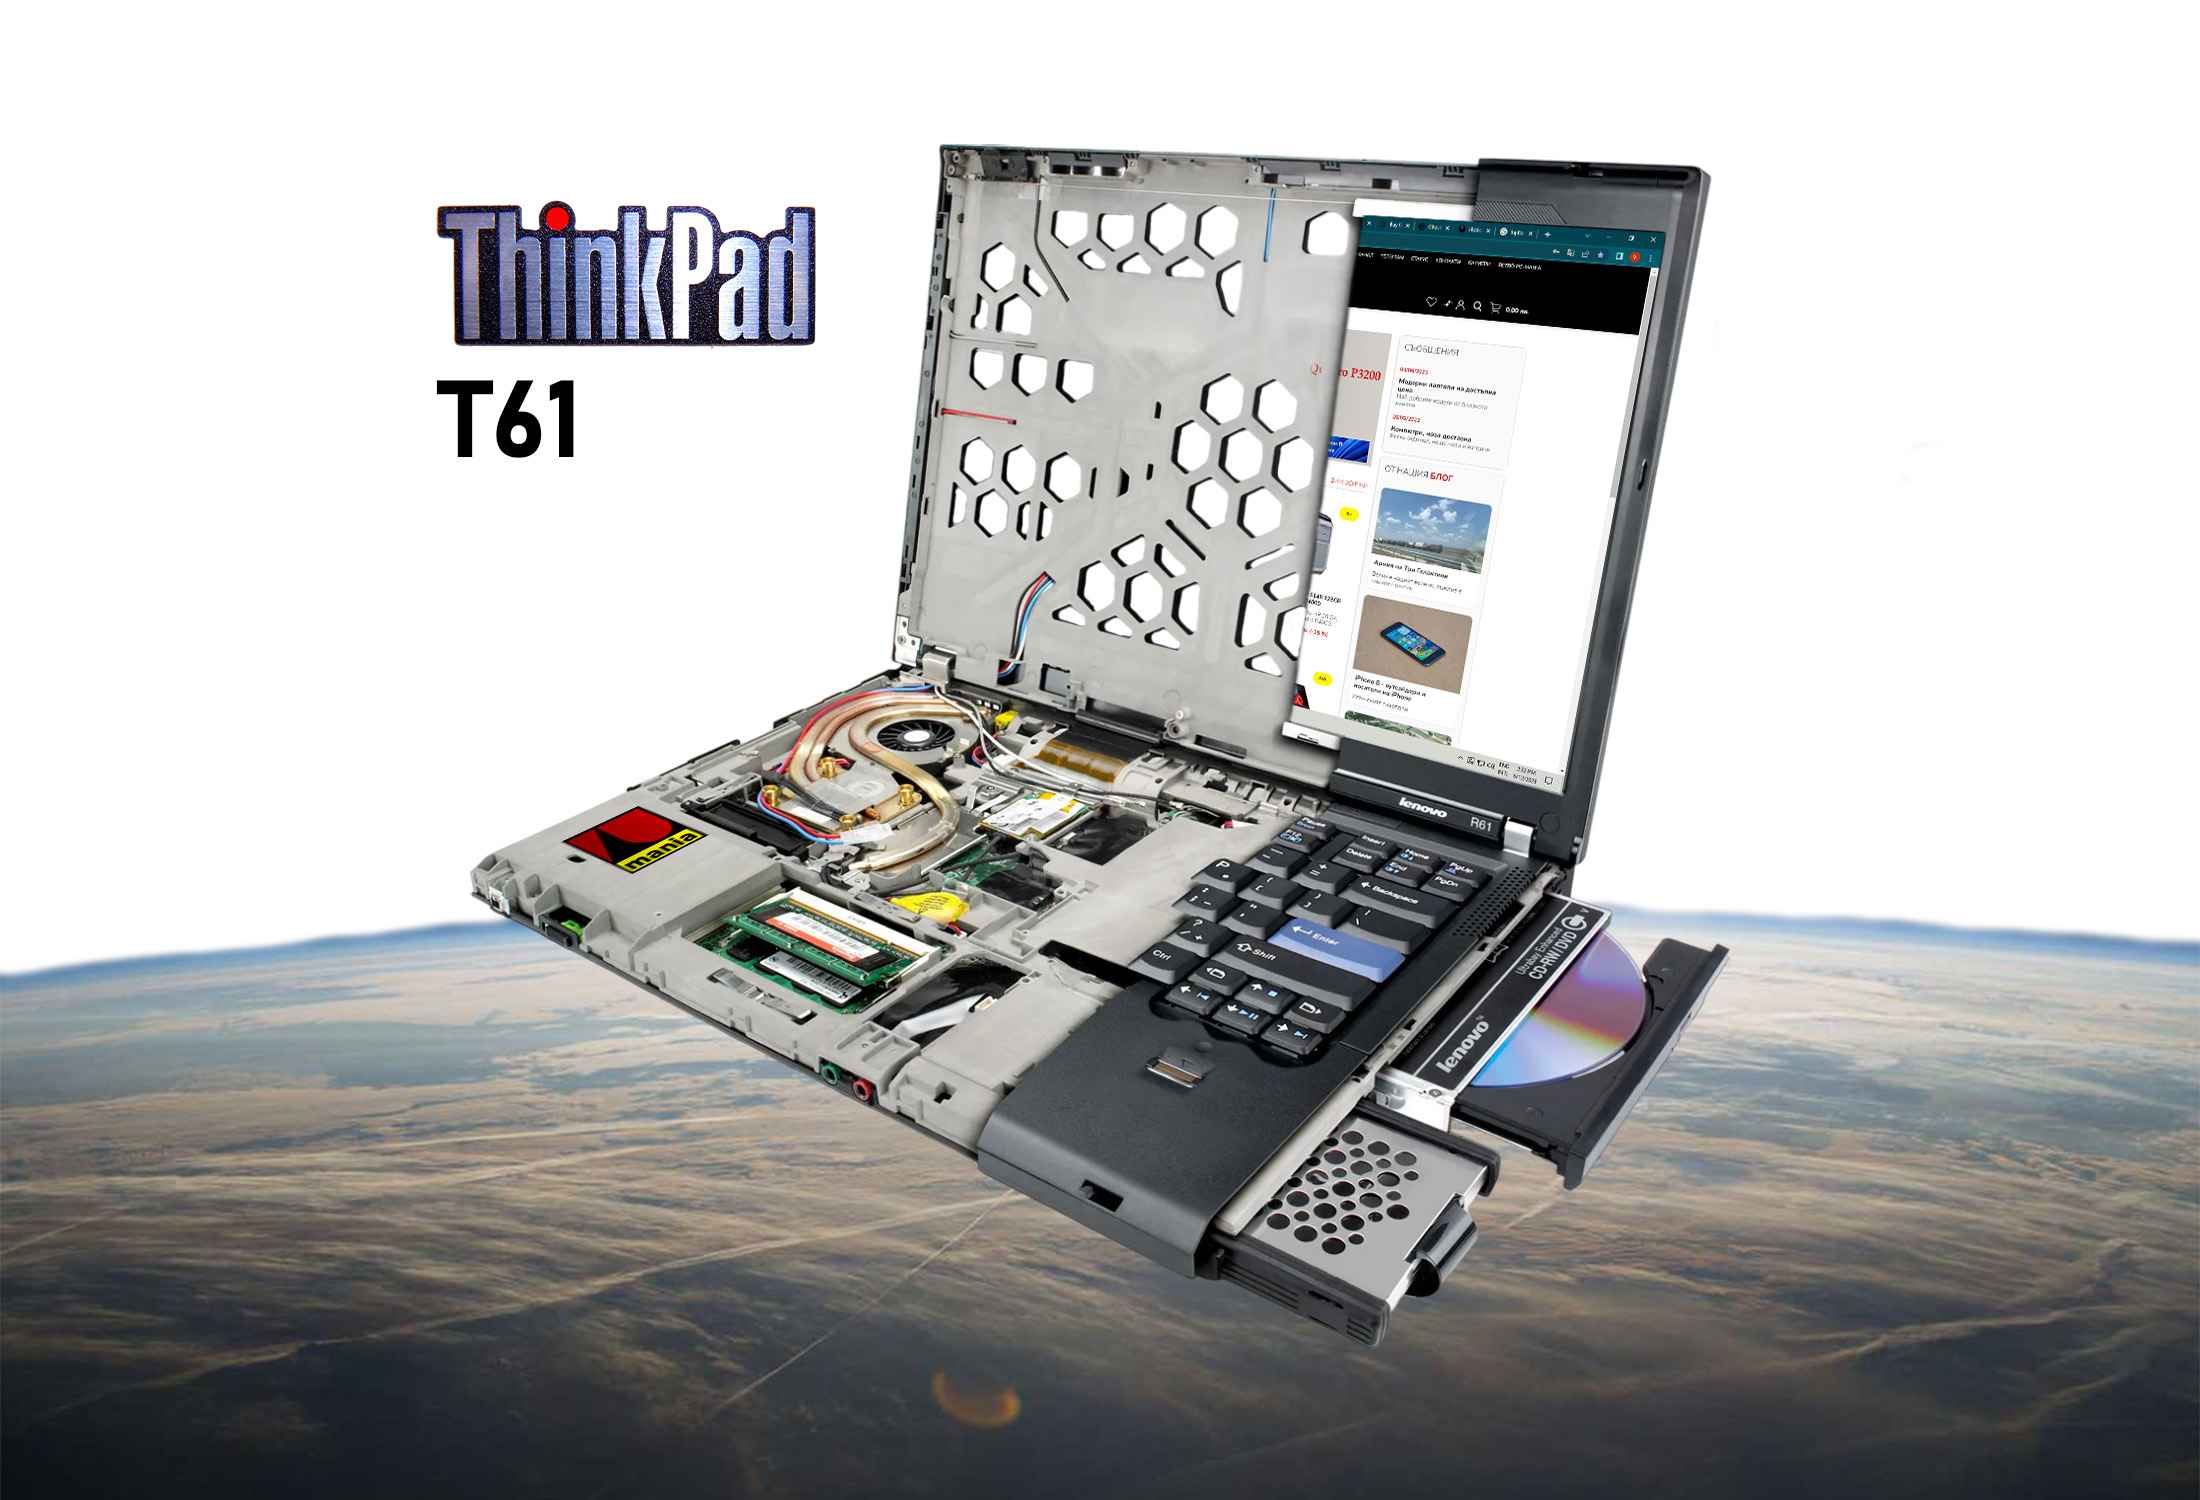 Lenovo Thinkpad T61 C2D T9300 8GB RAM NVS 140M 1680x1050-1iiXn.jpeg